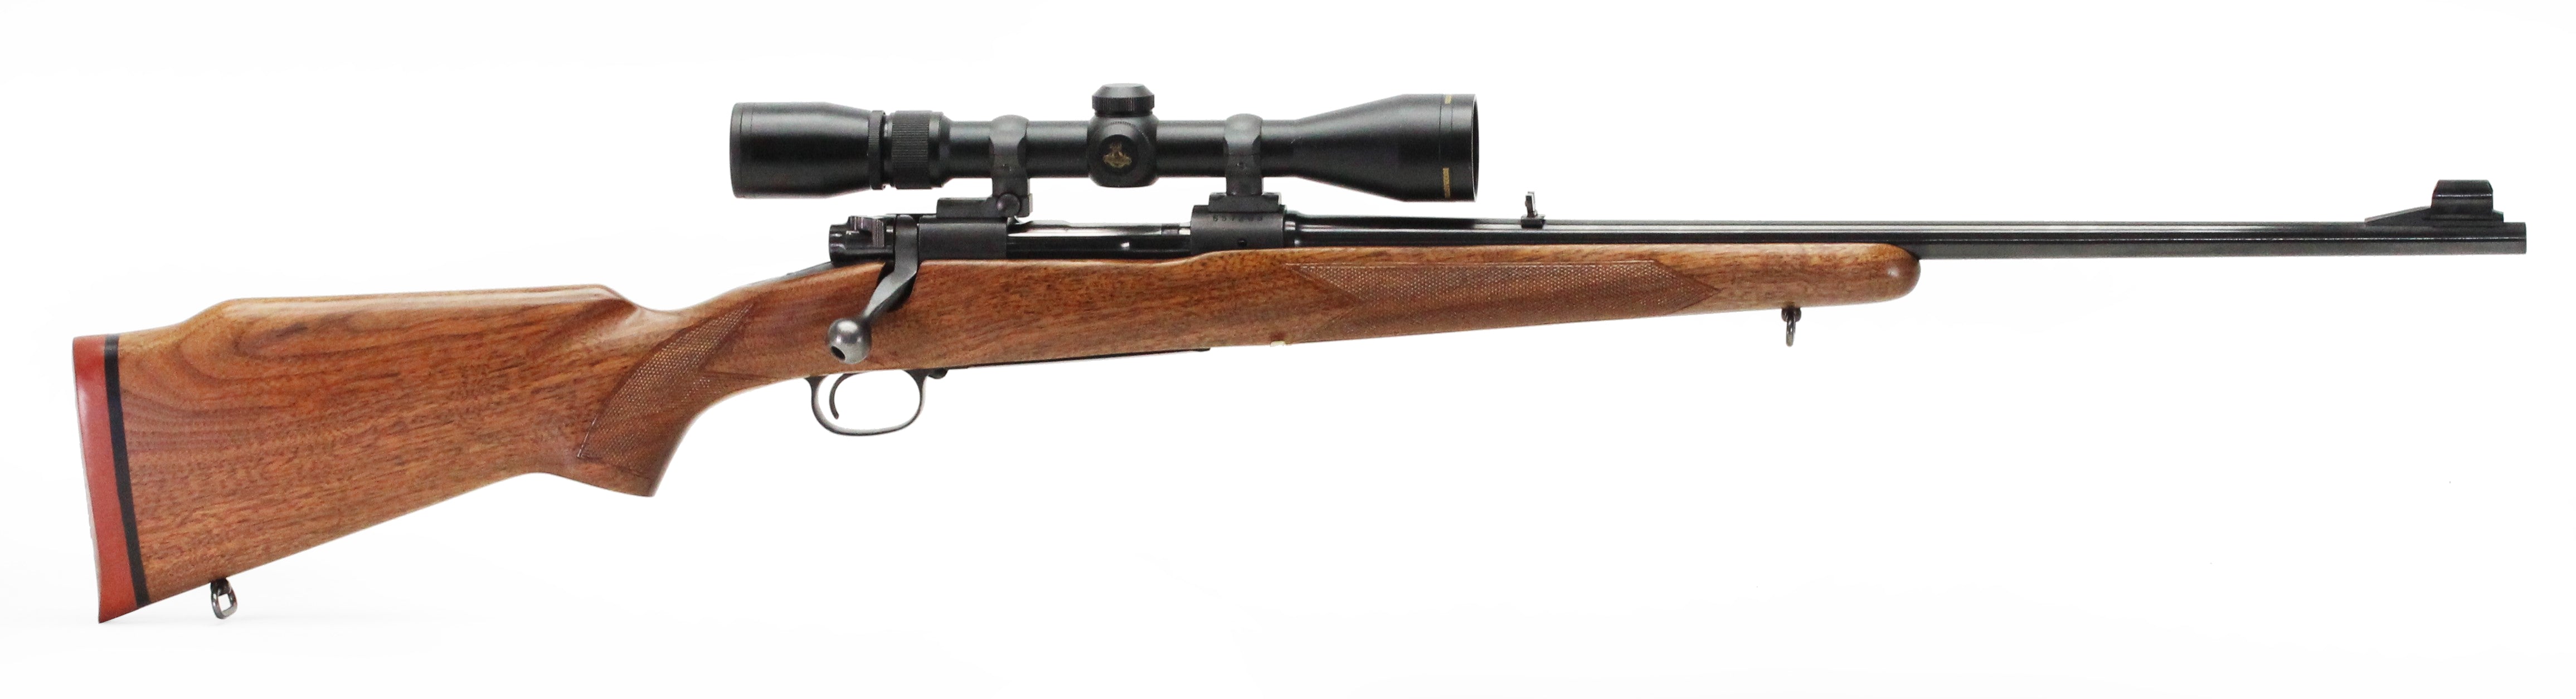 .30-06 Springfield Featherweight Rifle - 1962